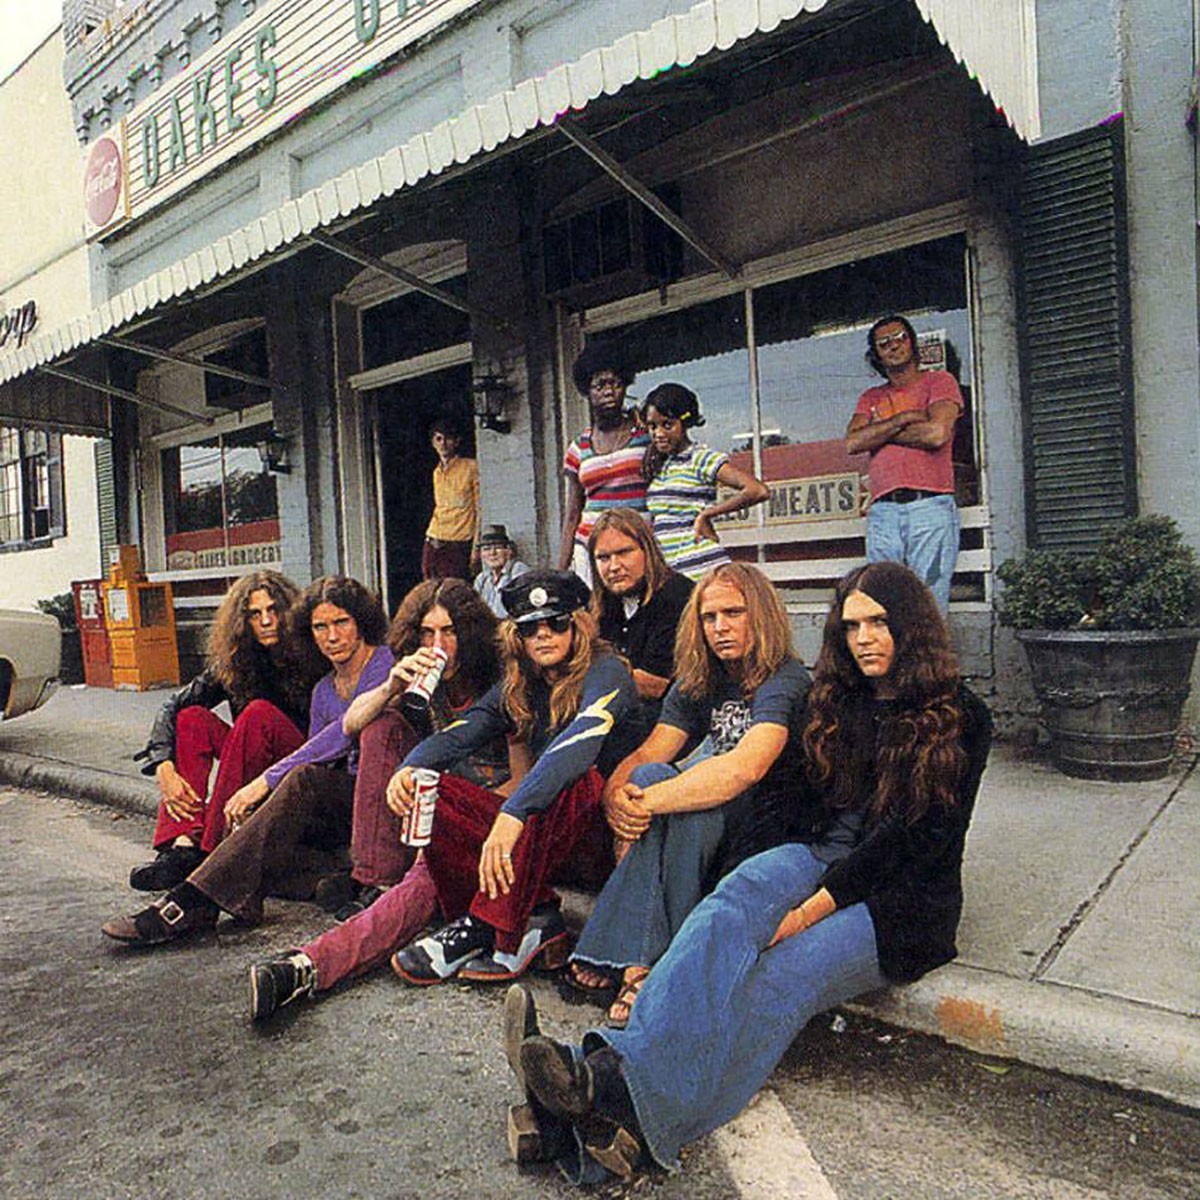 Lynyrd Skynyrd в 1973. Участники группы (сидящие слева): Аллен Коллинз, Билли Пауэлл, Боб Бернс, Леон Уилксон, Эд Кинг (сидящий сзади), Ронни Ван Зант и Гэри Россингтон.